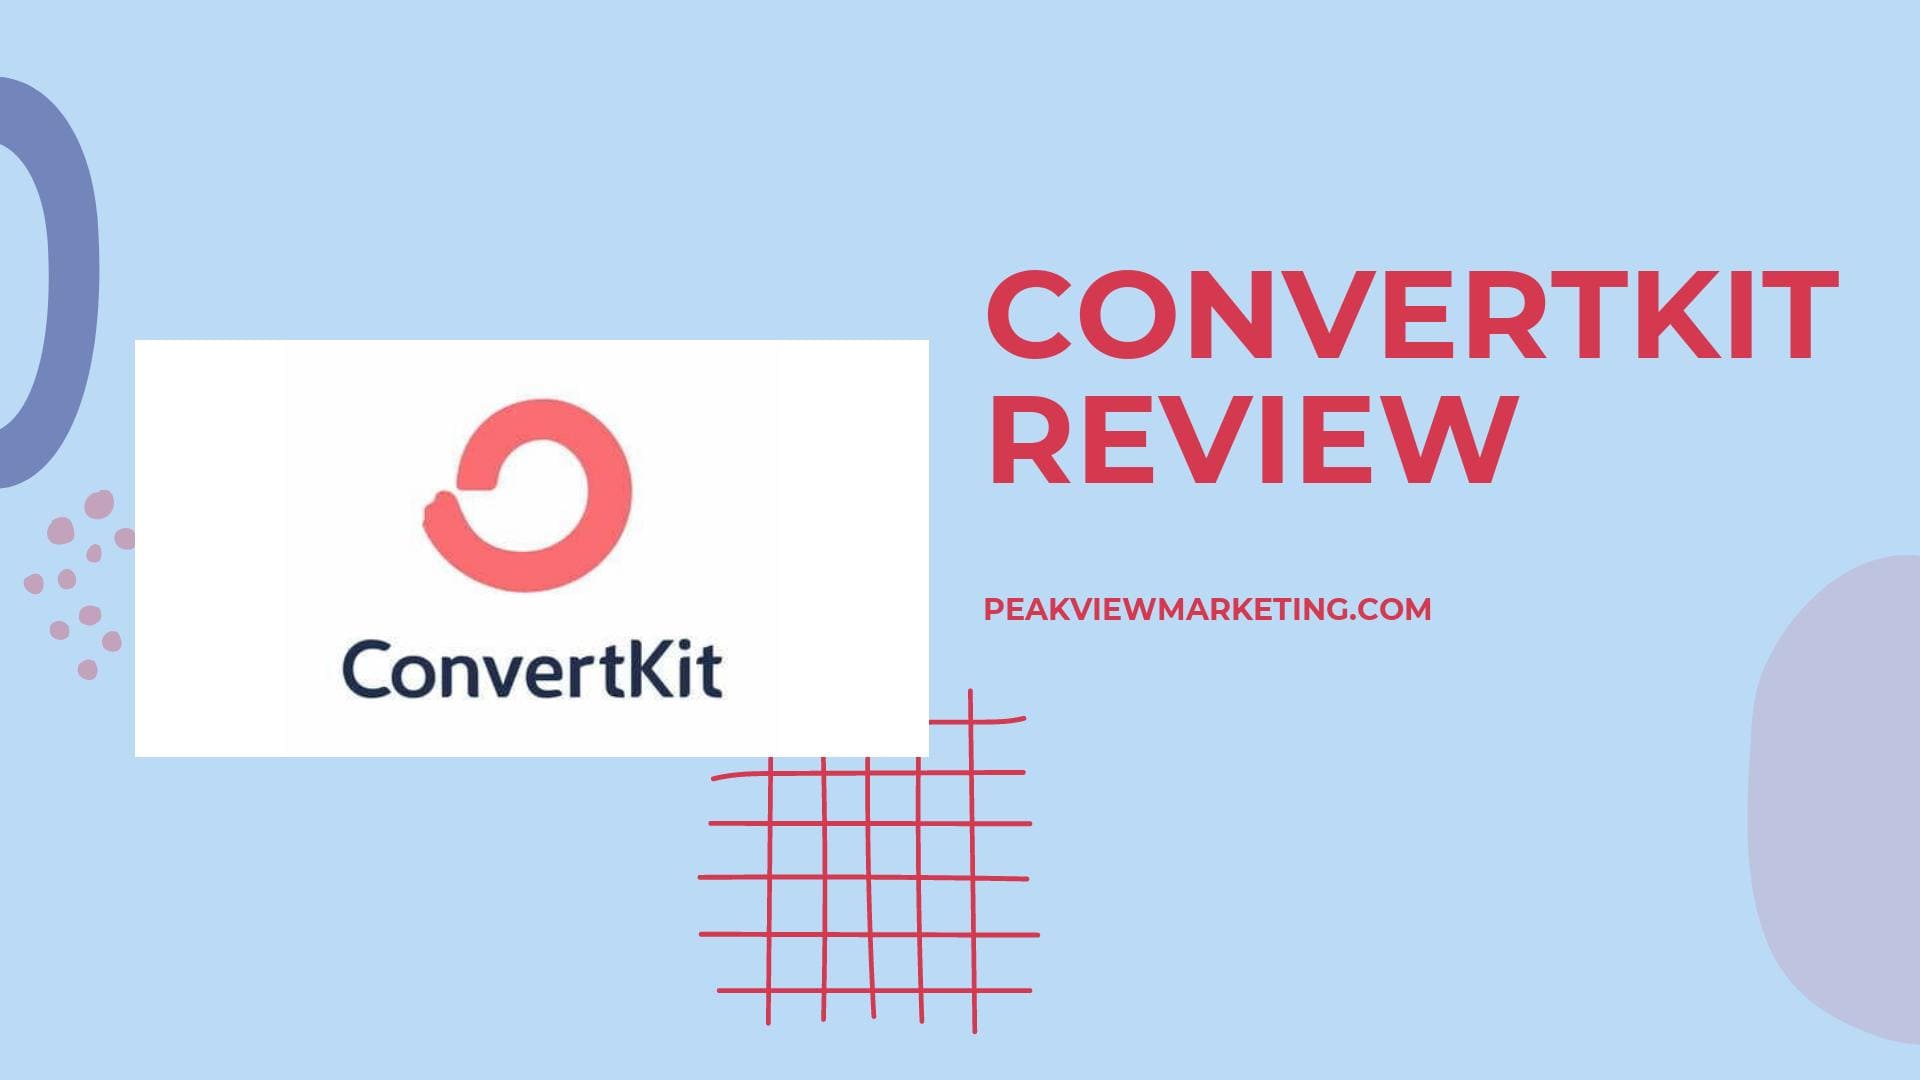 ConvertKit Review Image